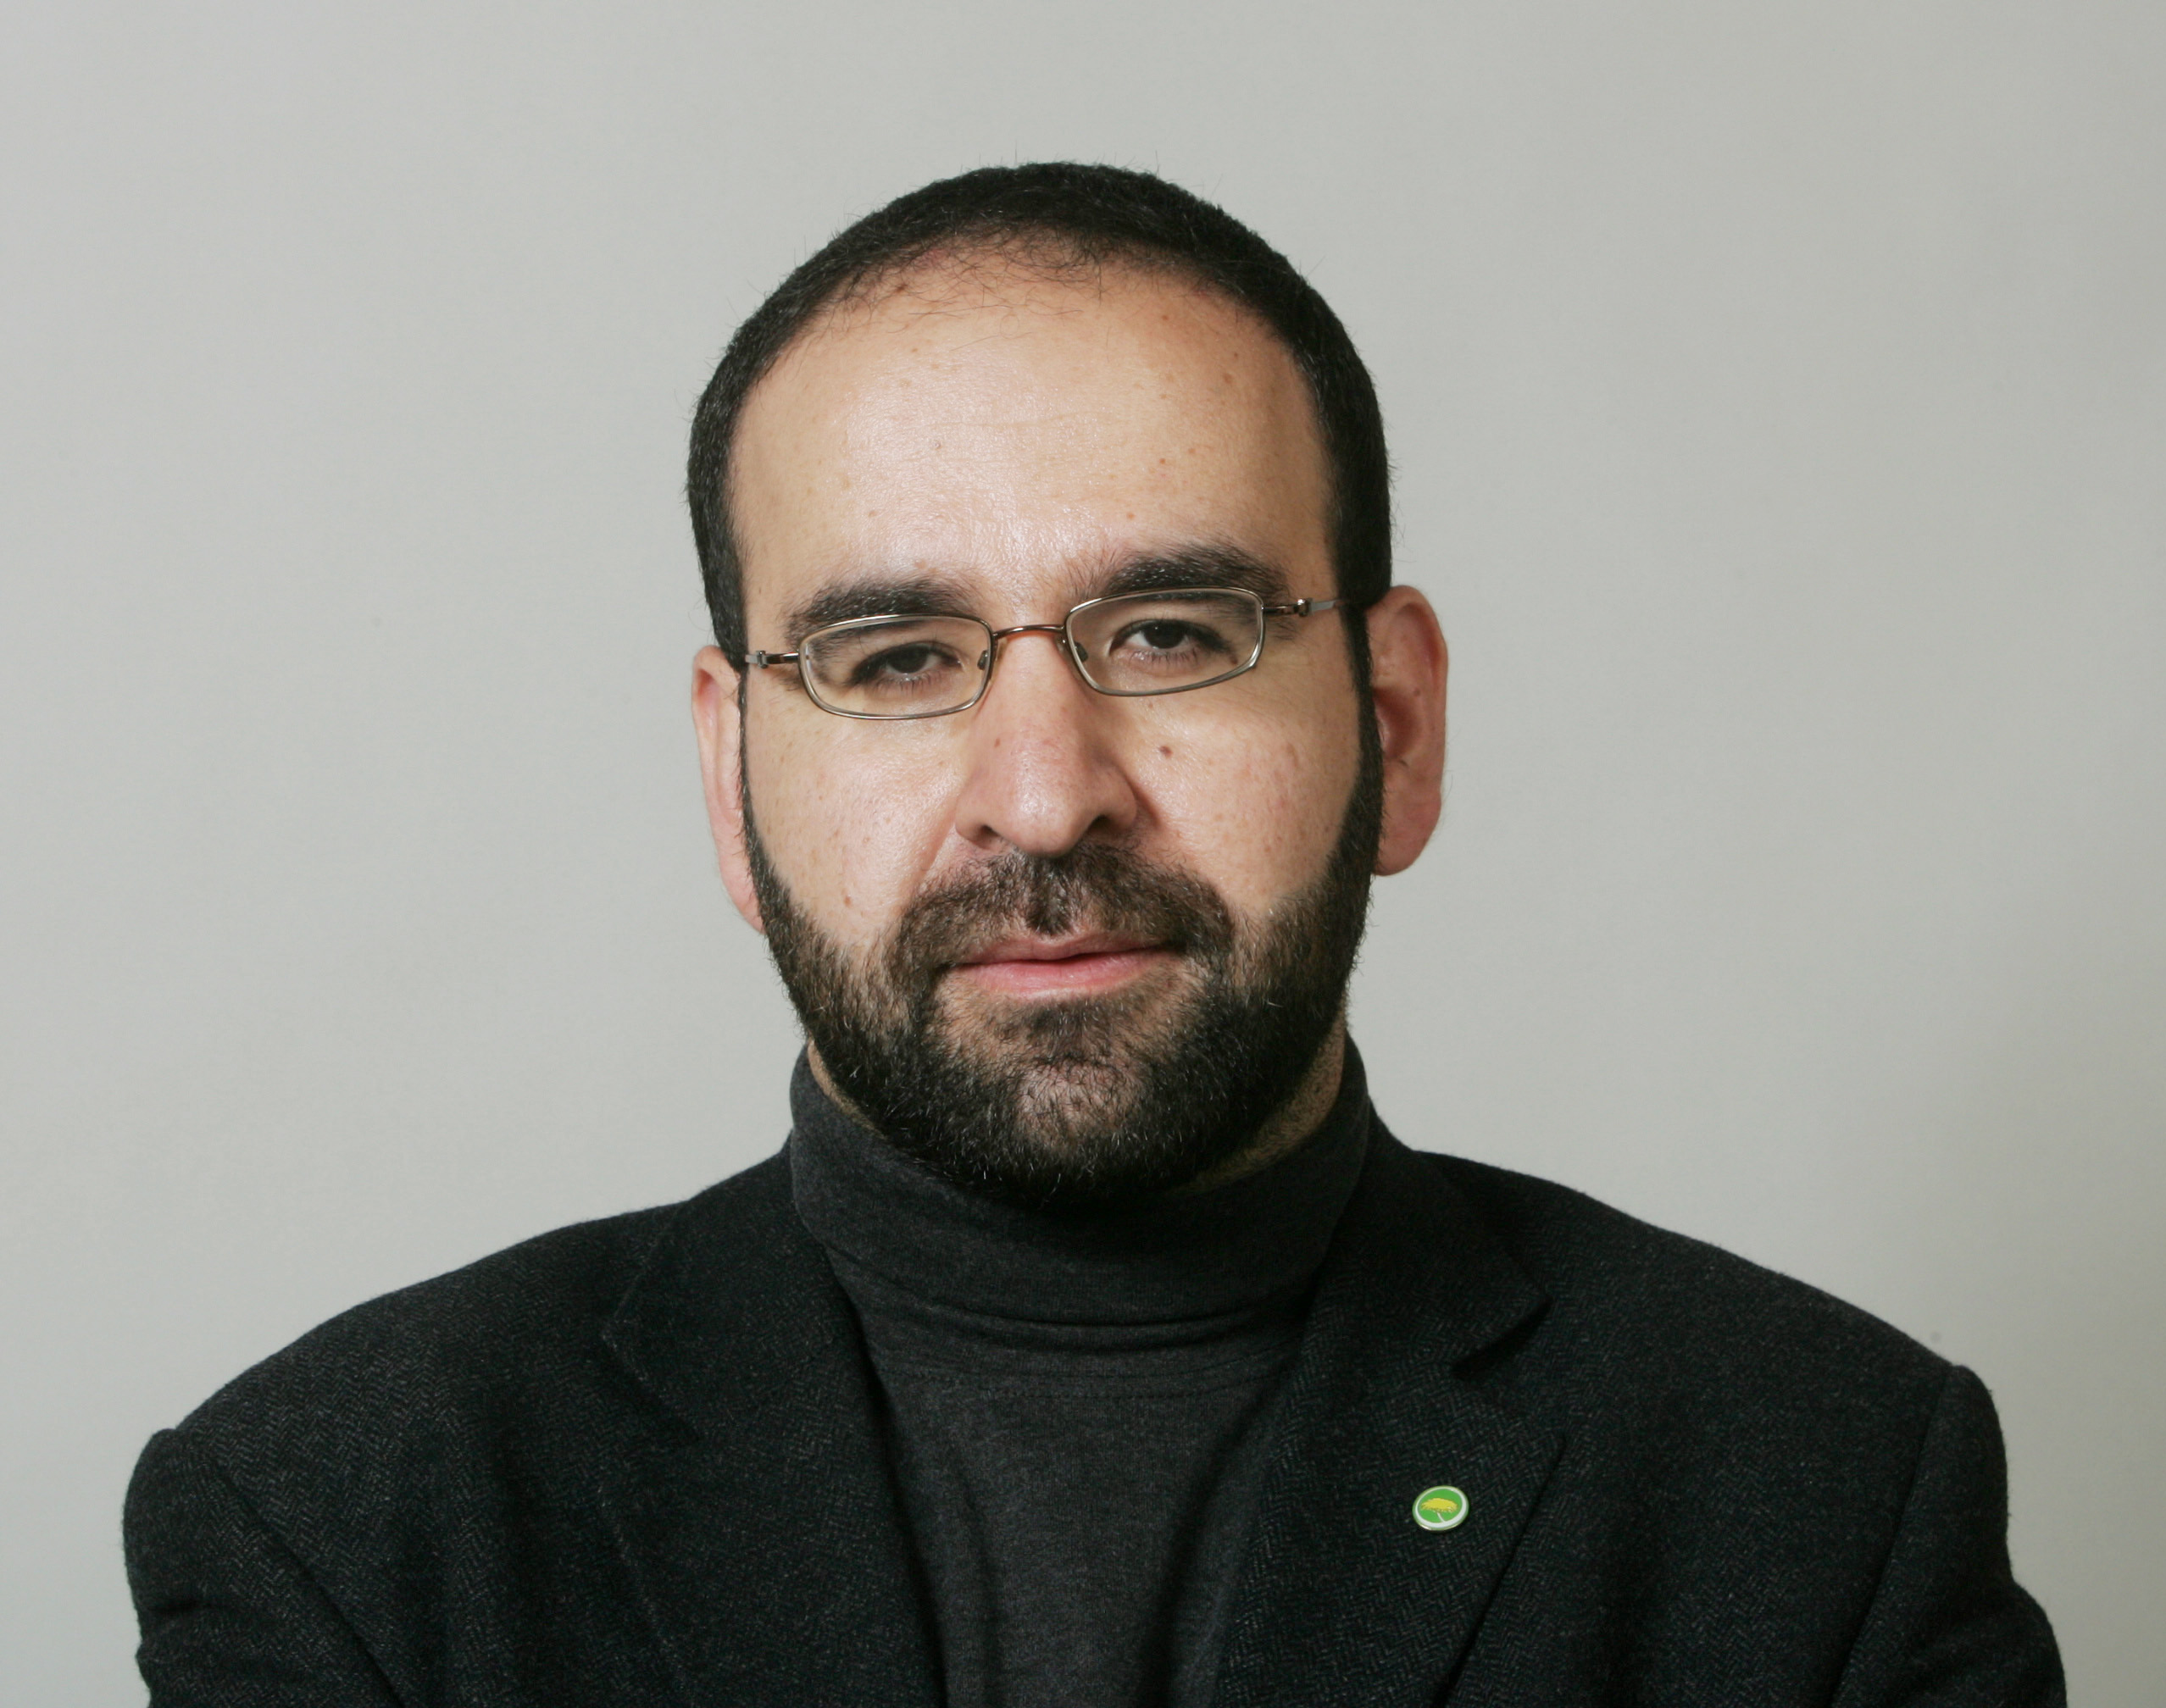 Samt miljöpartisten Mehmet Kaplan.